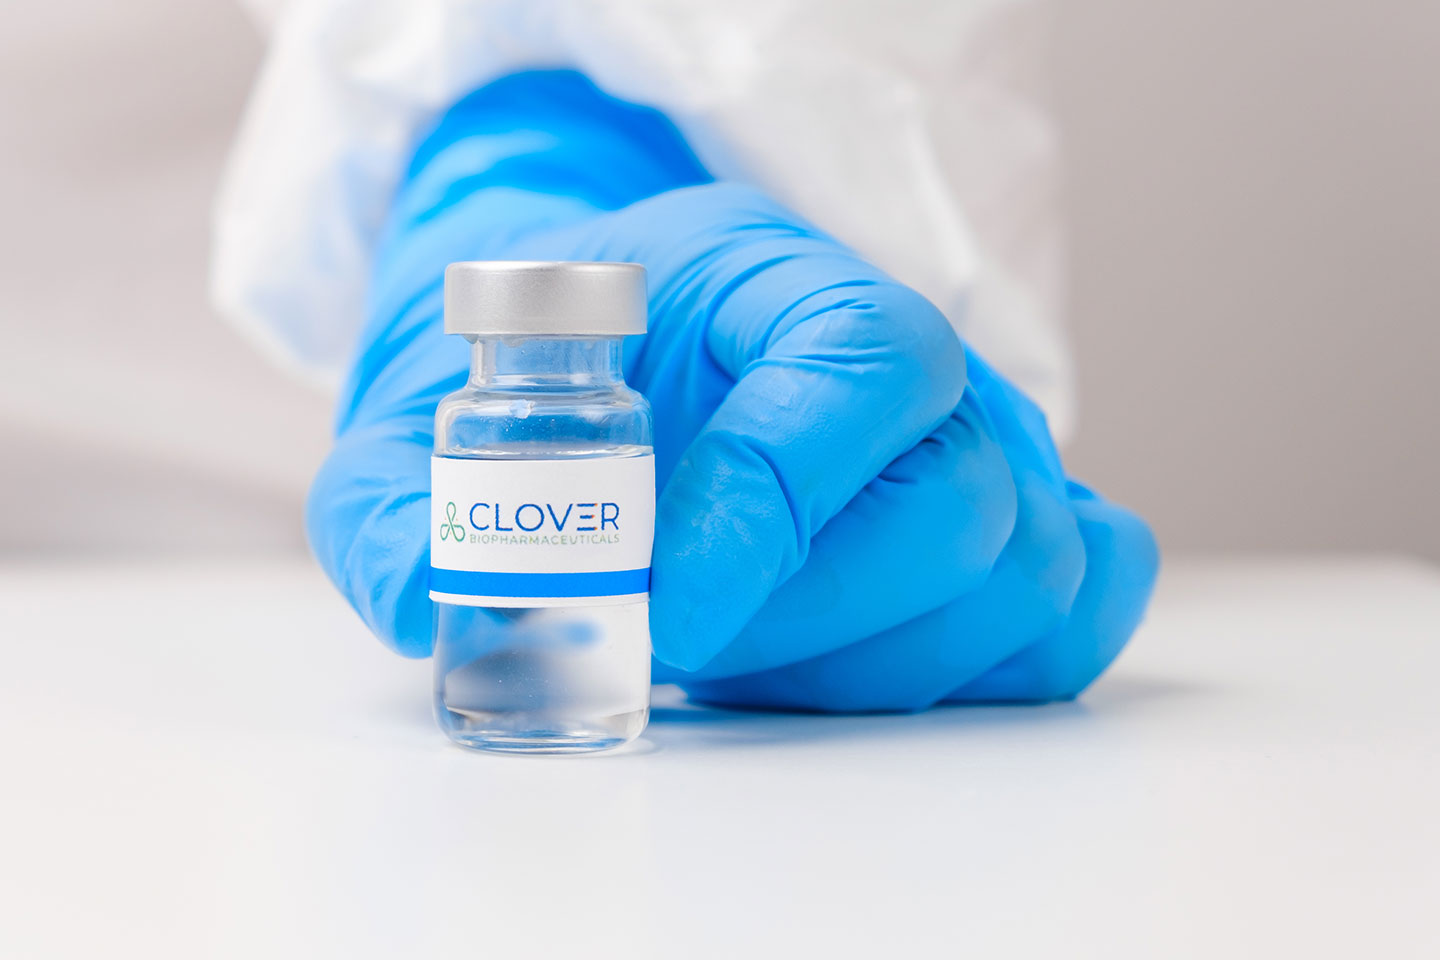 Clover vial